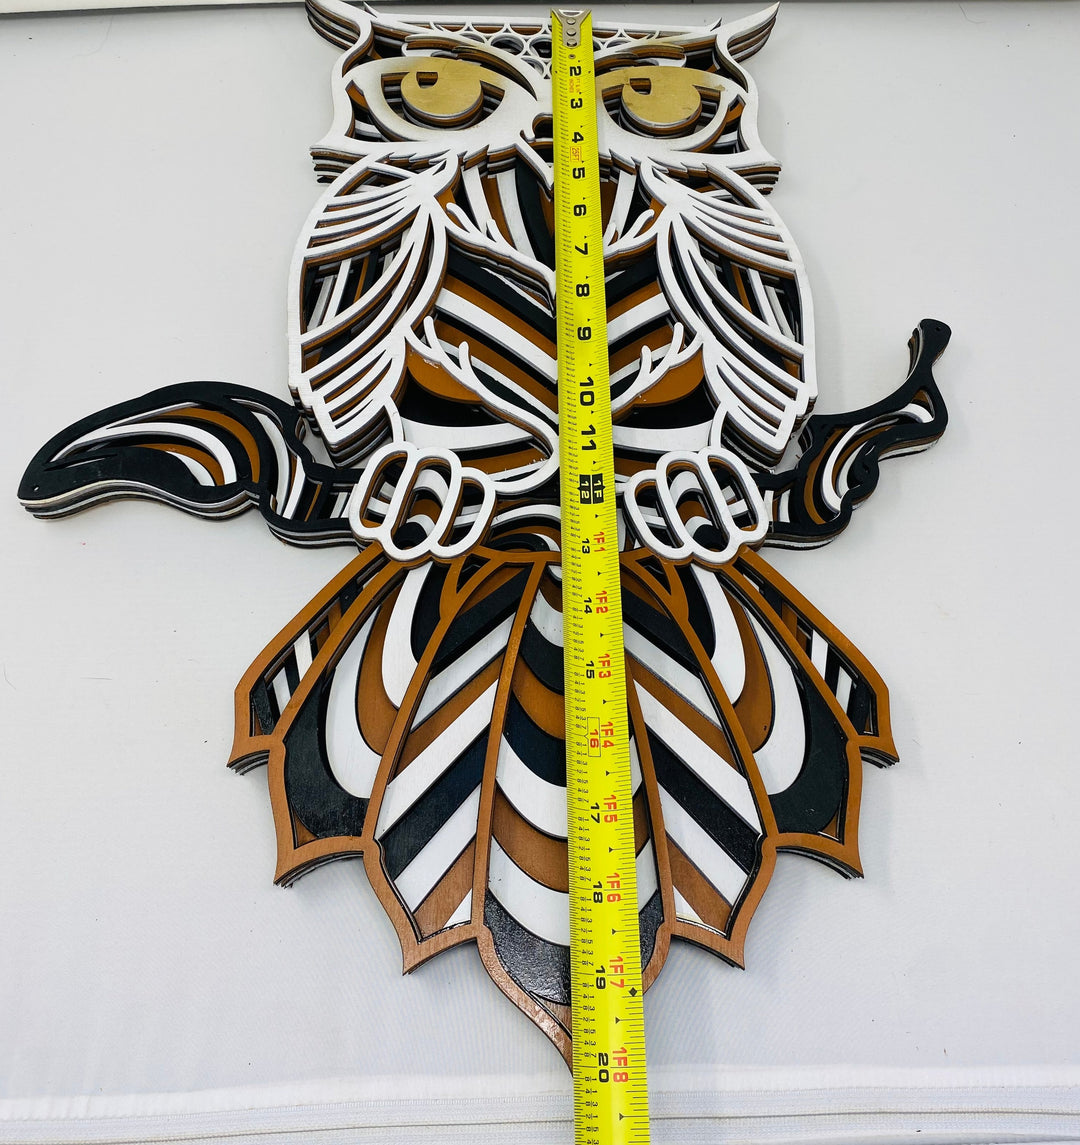 Wall Decoration Owl 3D Art Multilayer Wood Art